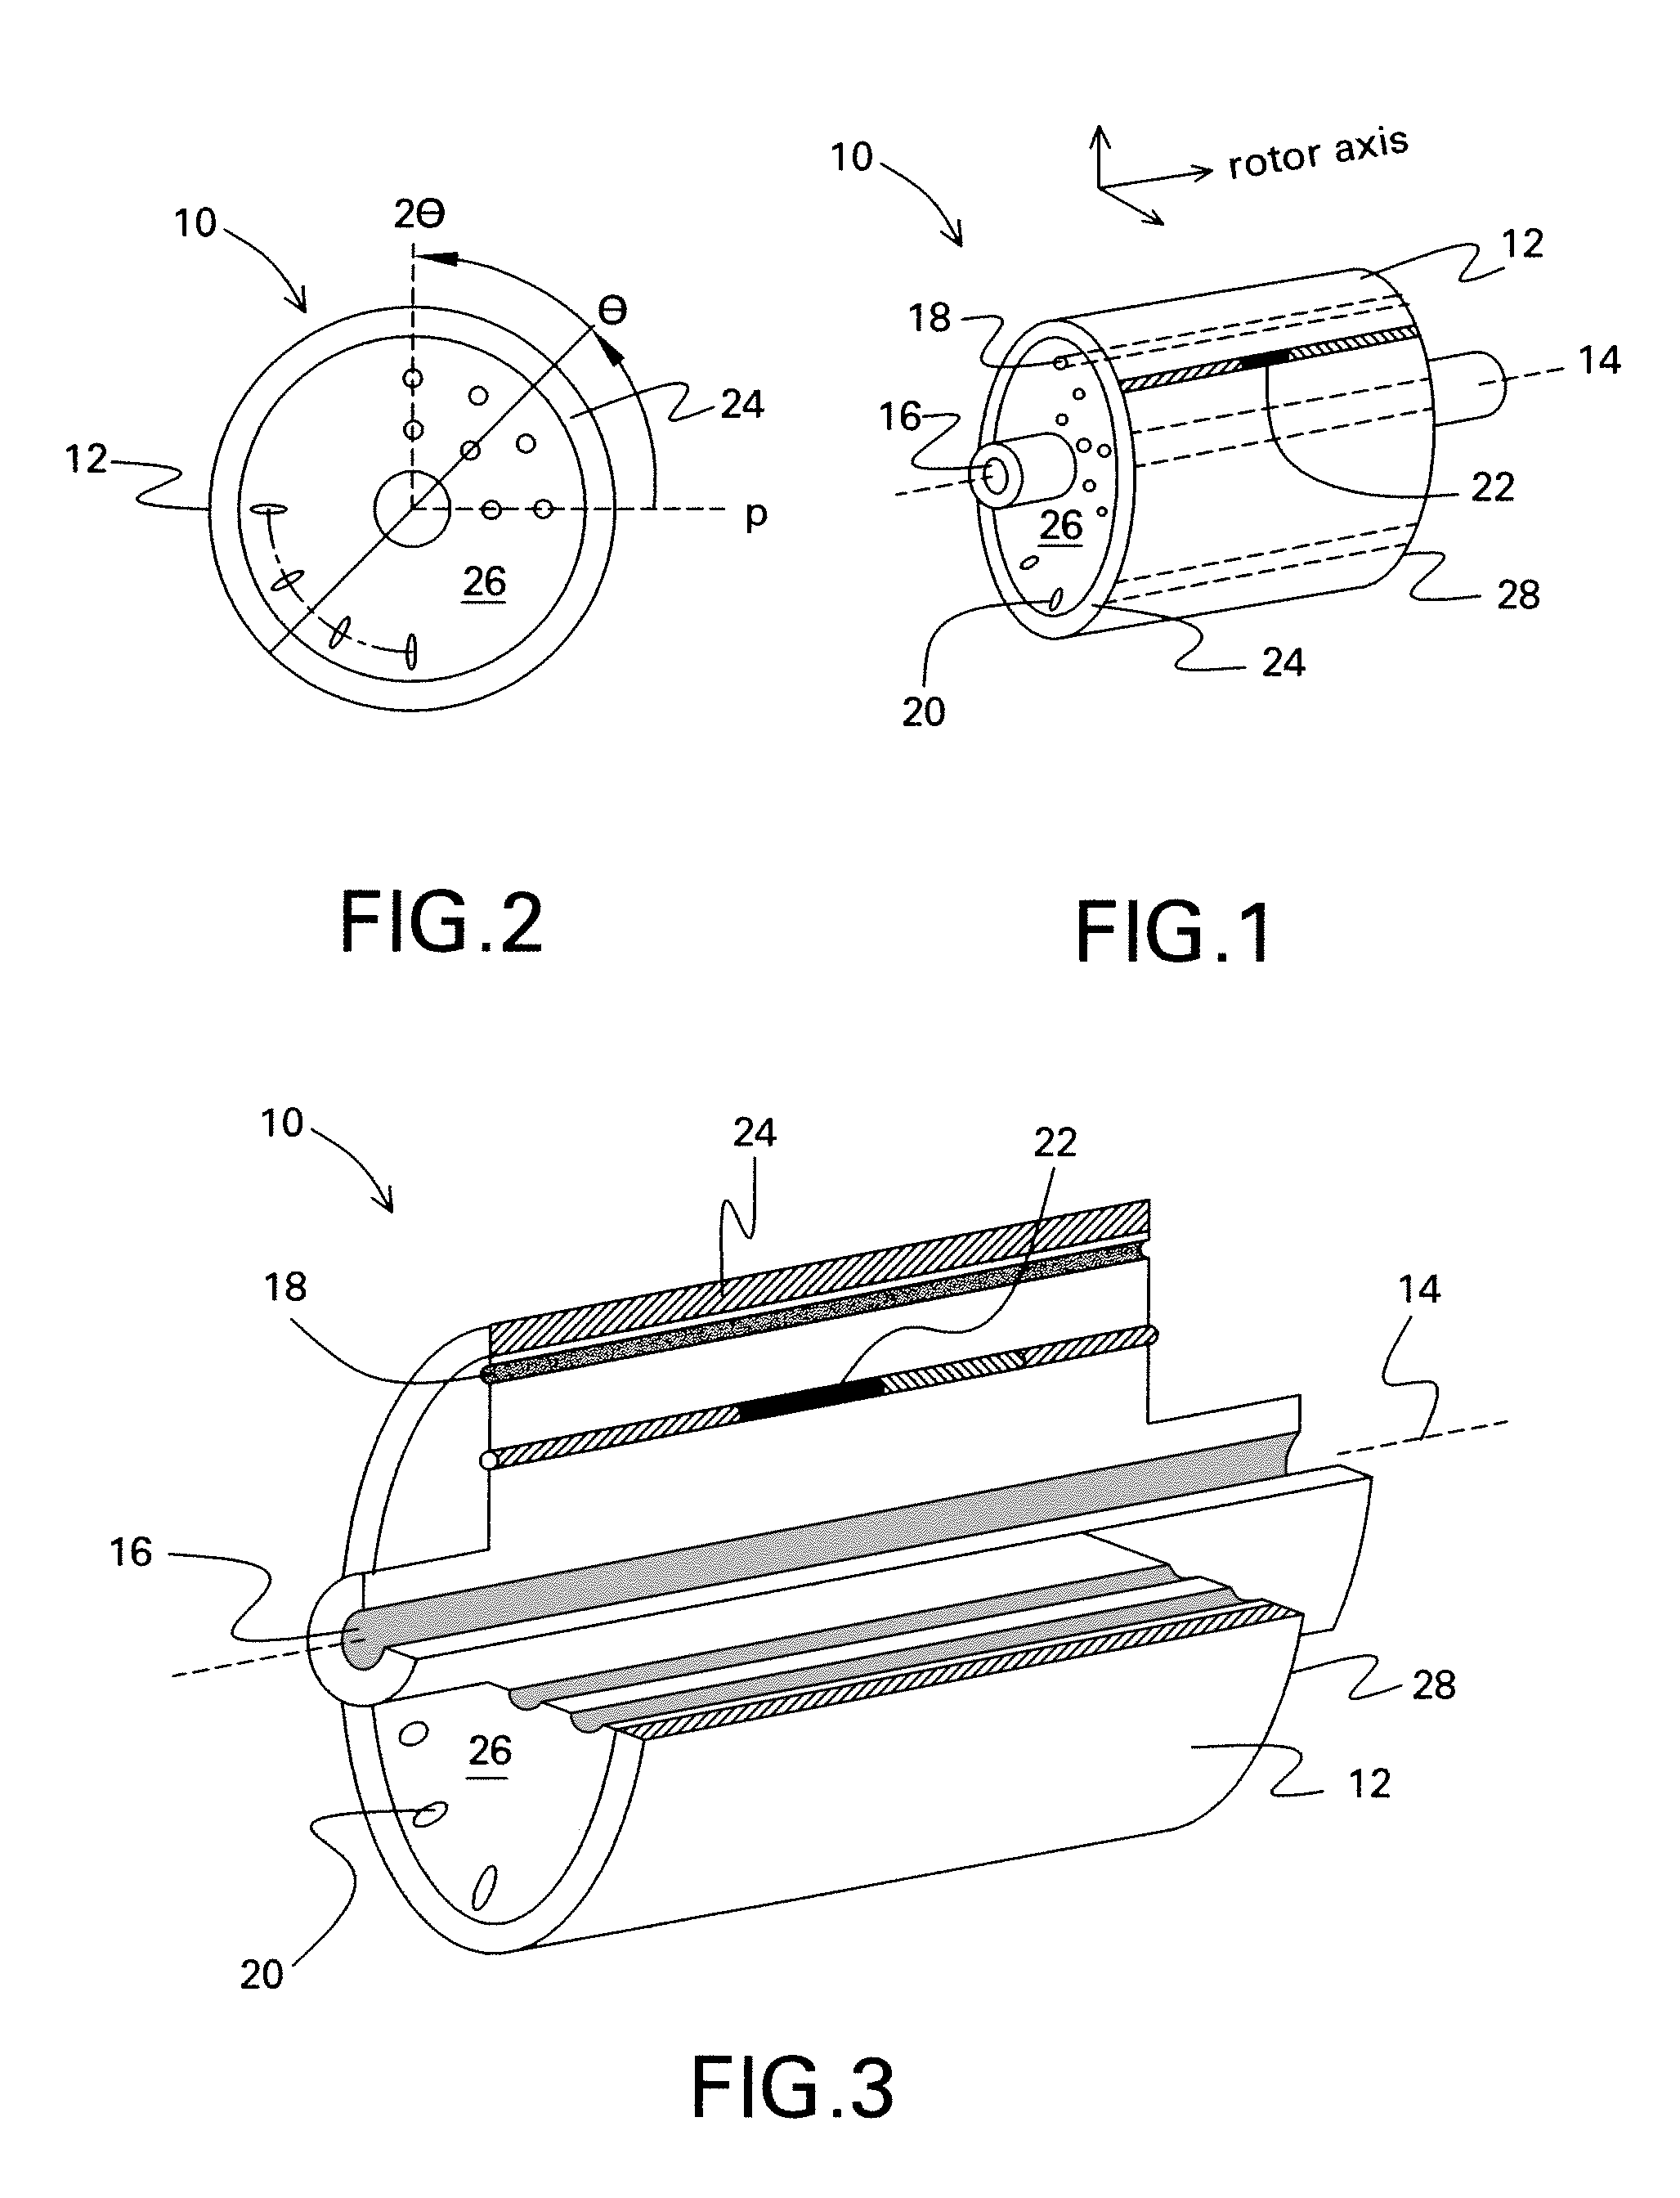 Method and apparatus for balancing a rotor